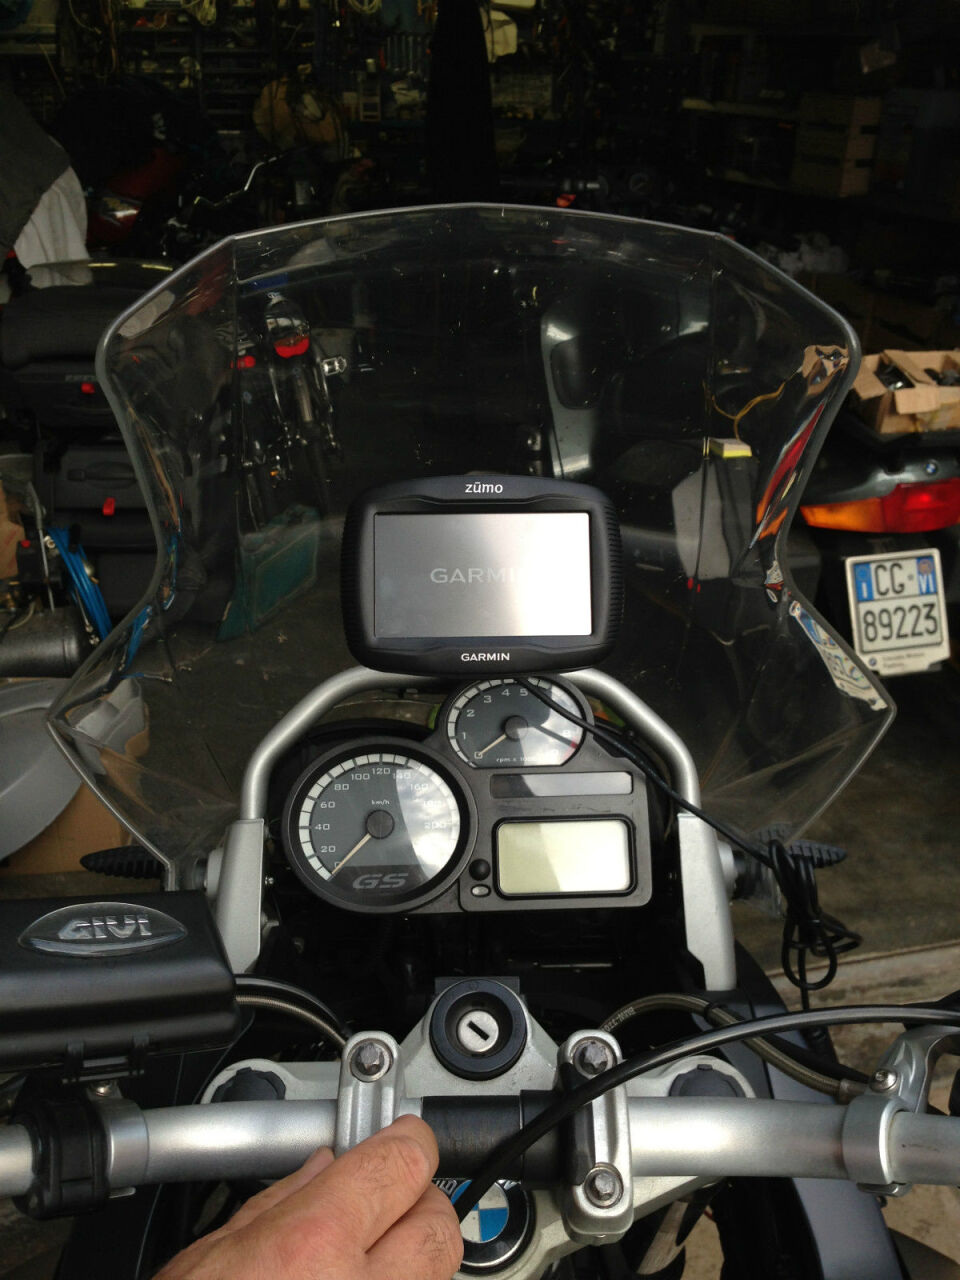 BMW R 1200 GS GPS/Smart phone houder 2004-2007